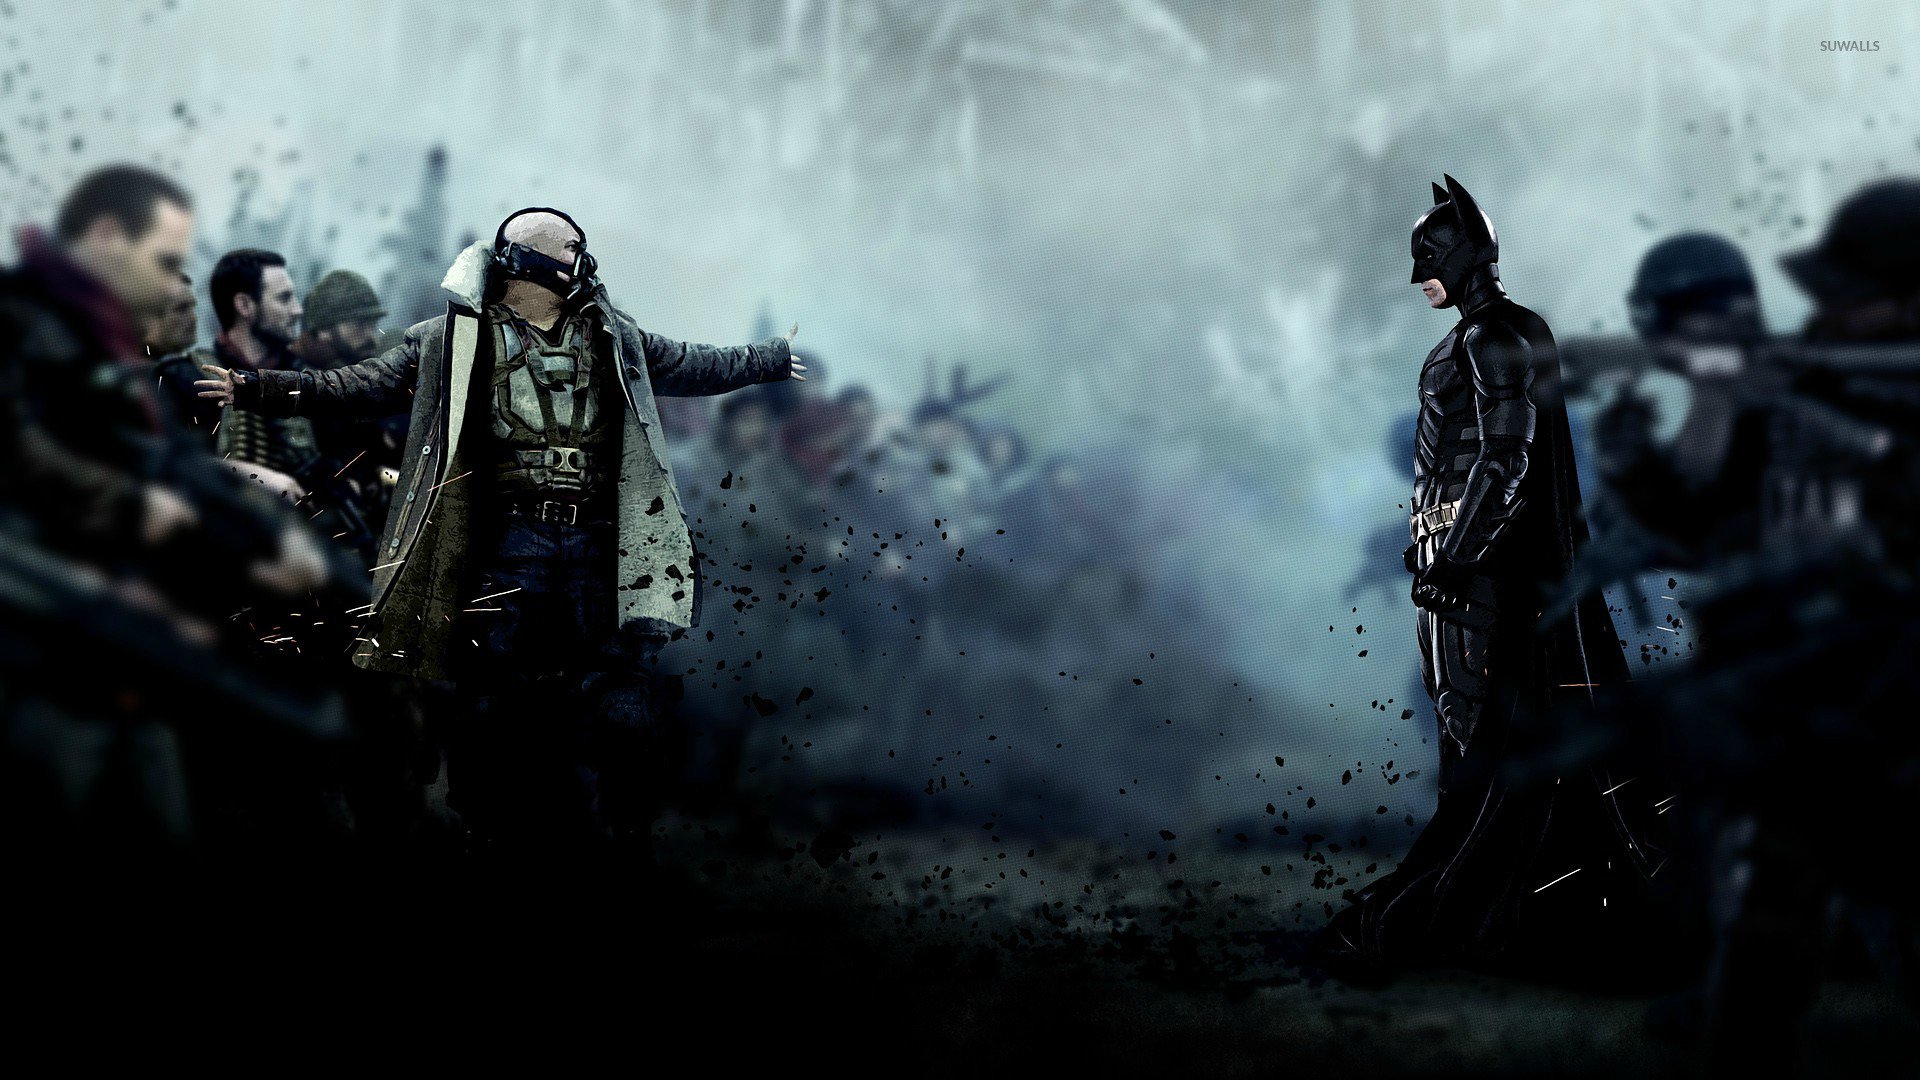 Bane and Batman   The Dark Knight Rises wallpaper   Movie